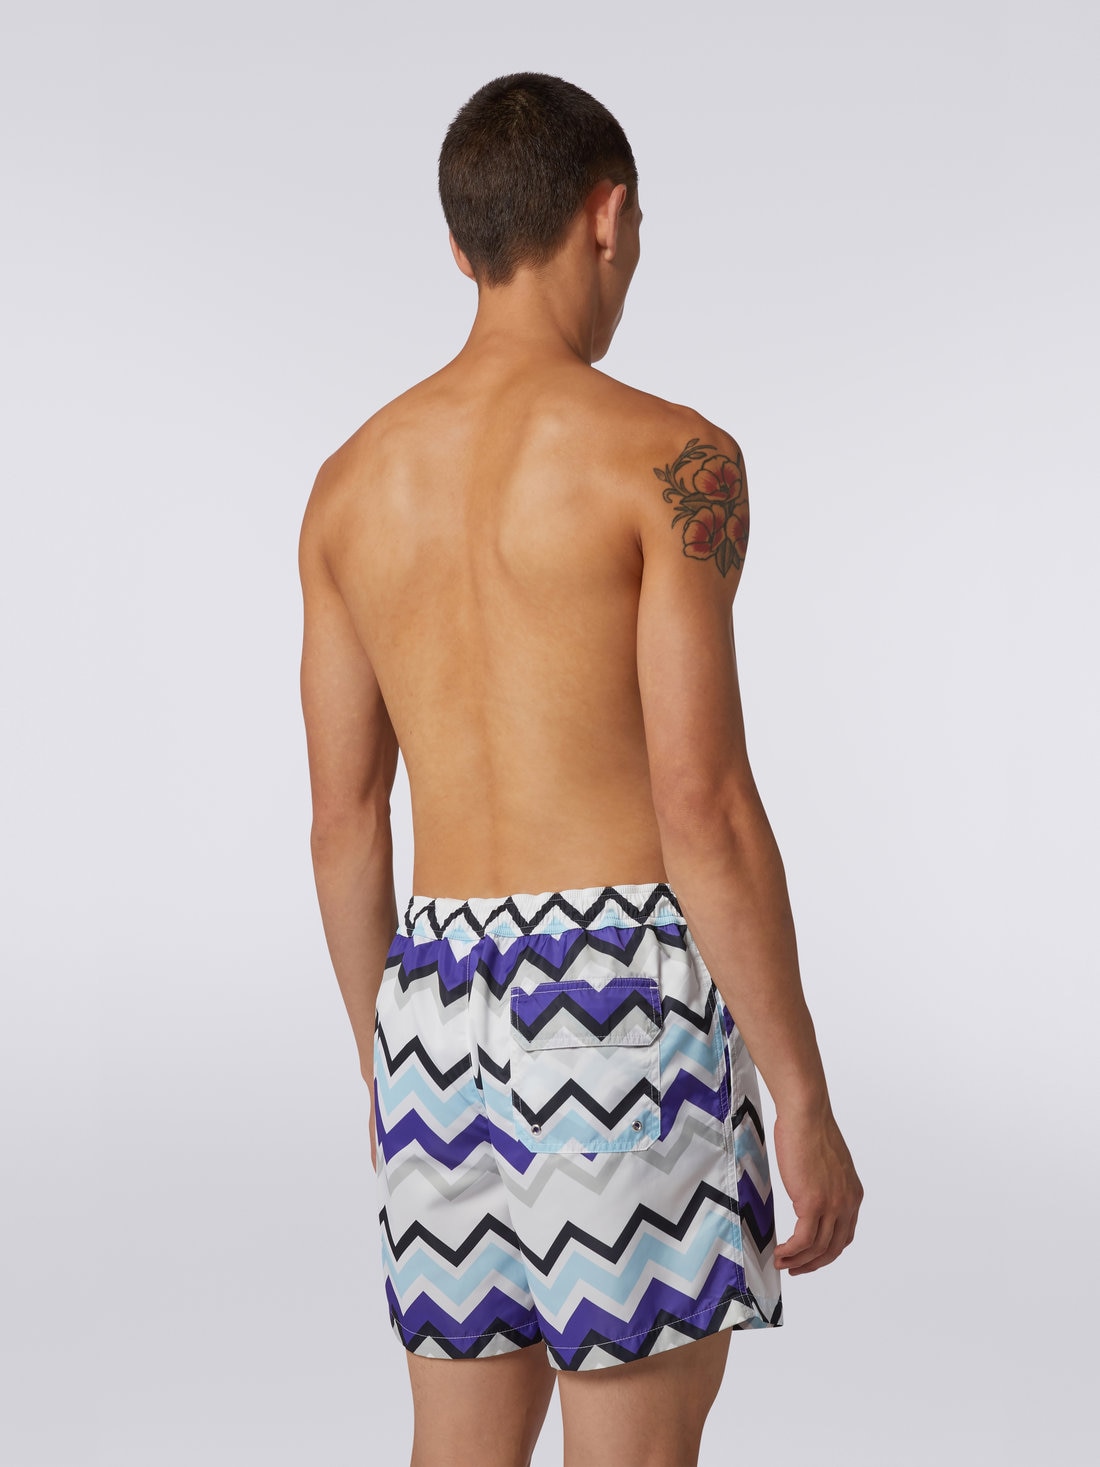 Nylon blend swimming trunks with large zigzag print, Blue, Grey & White - 3